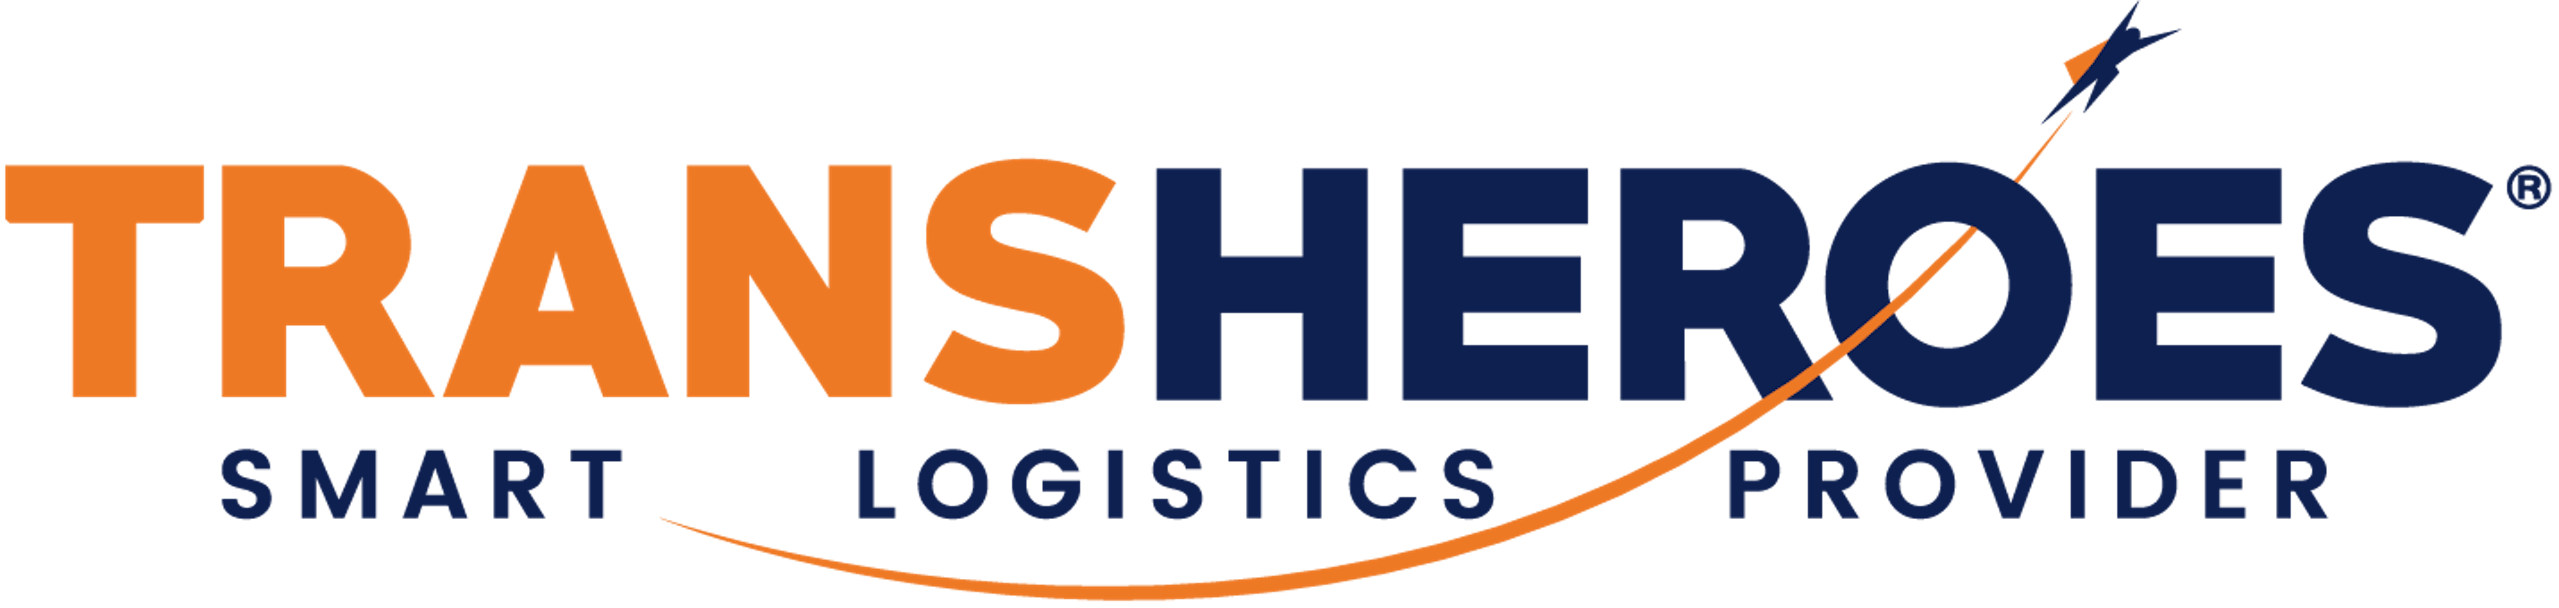 TransHeroes Smart Logistics Provider